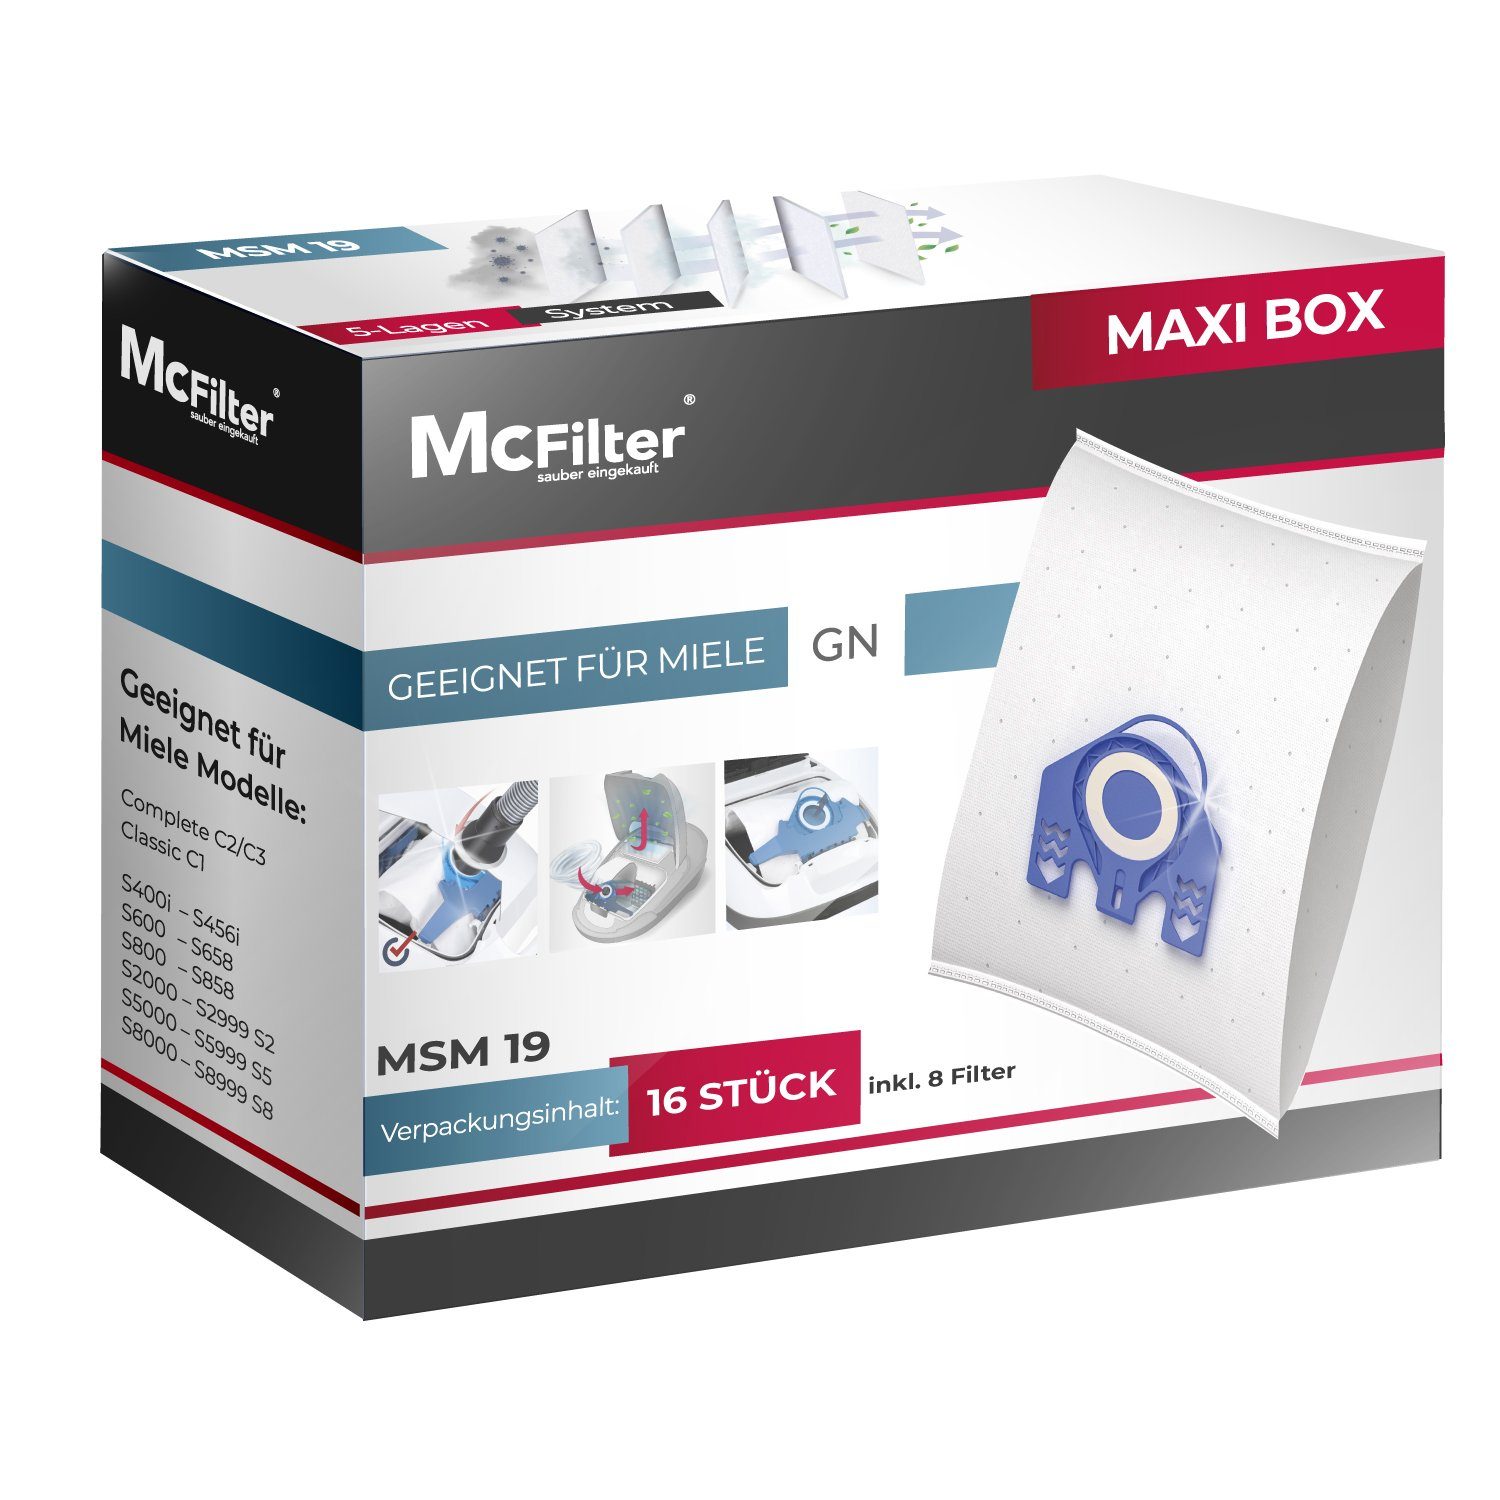 McFilter Staubsaugerbeutel >MAXI BOX< (16+8), passend für Miele Staubsauger S8360, wie 10408410, 16 St., inkl. 8 Filter, Top Miele Alternative zu 9917730